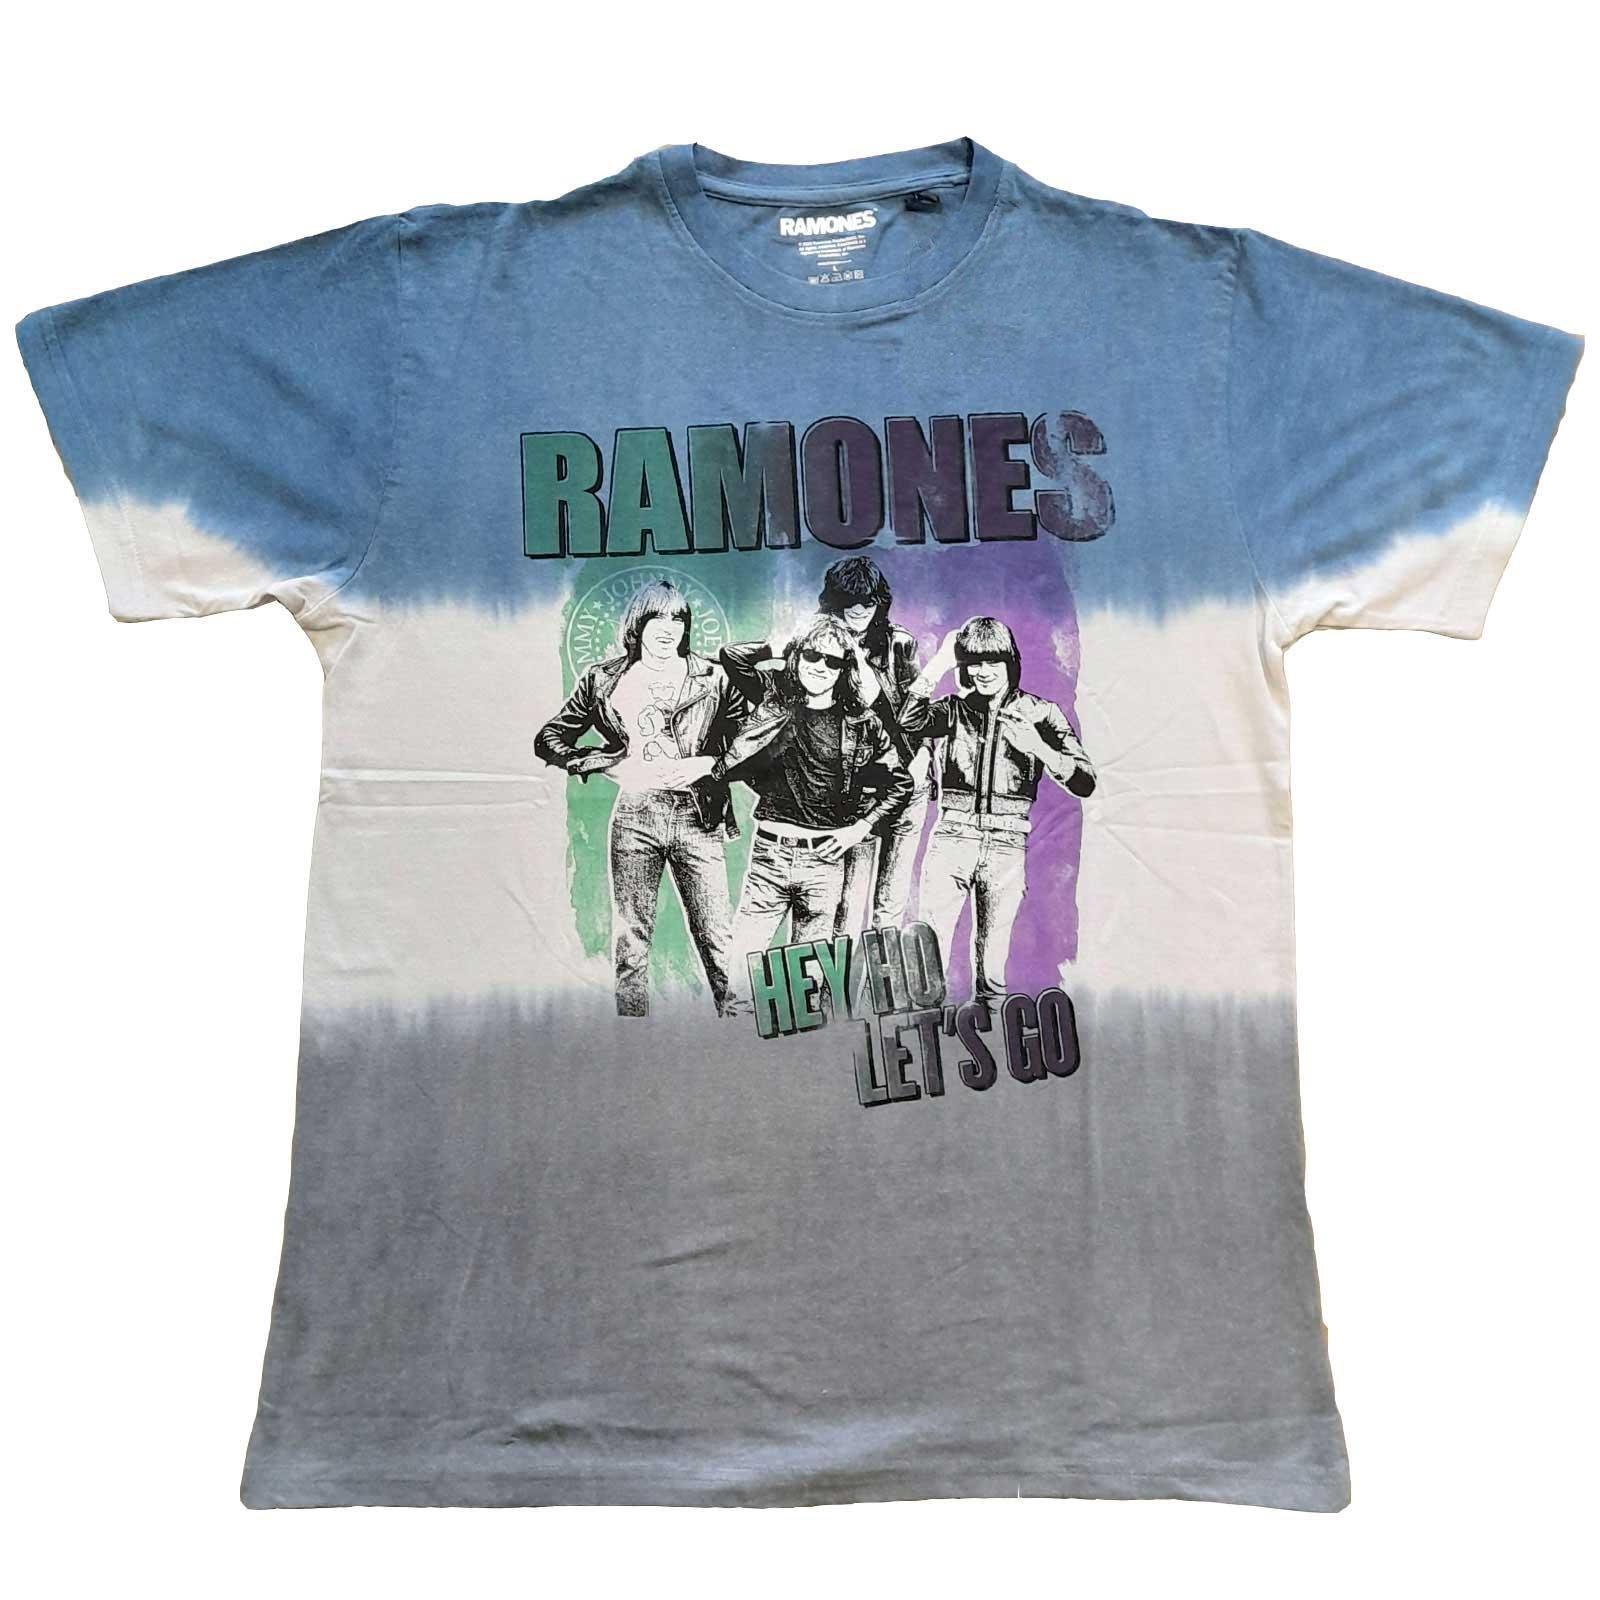 Hey Ho Retro Tshirt Damen Blau S von Ramones